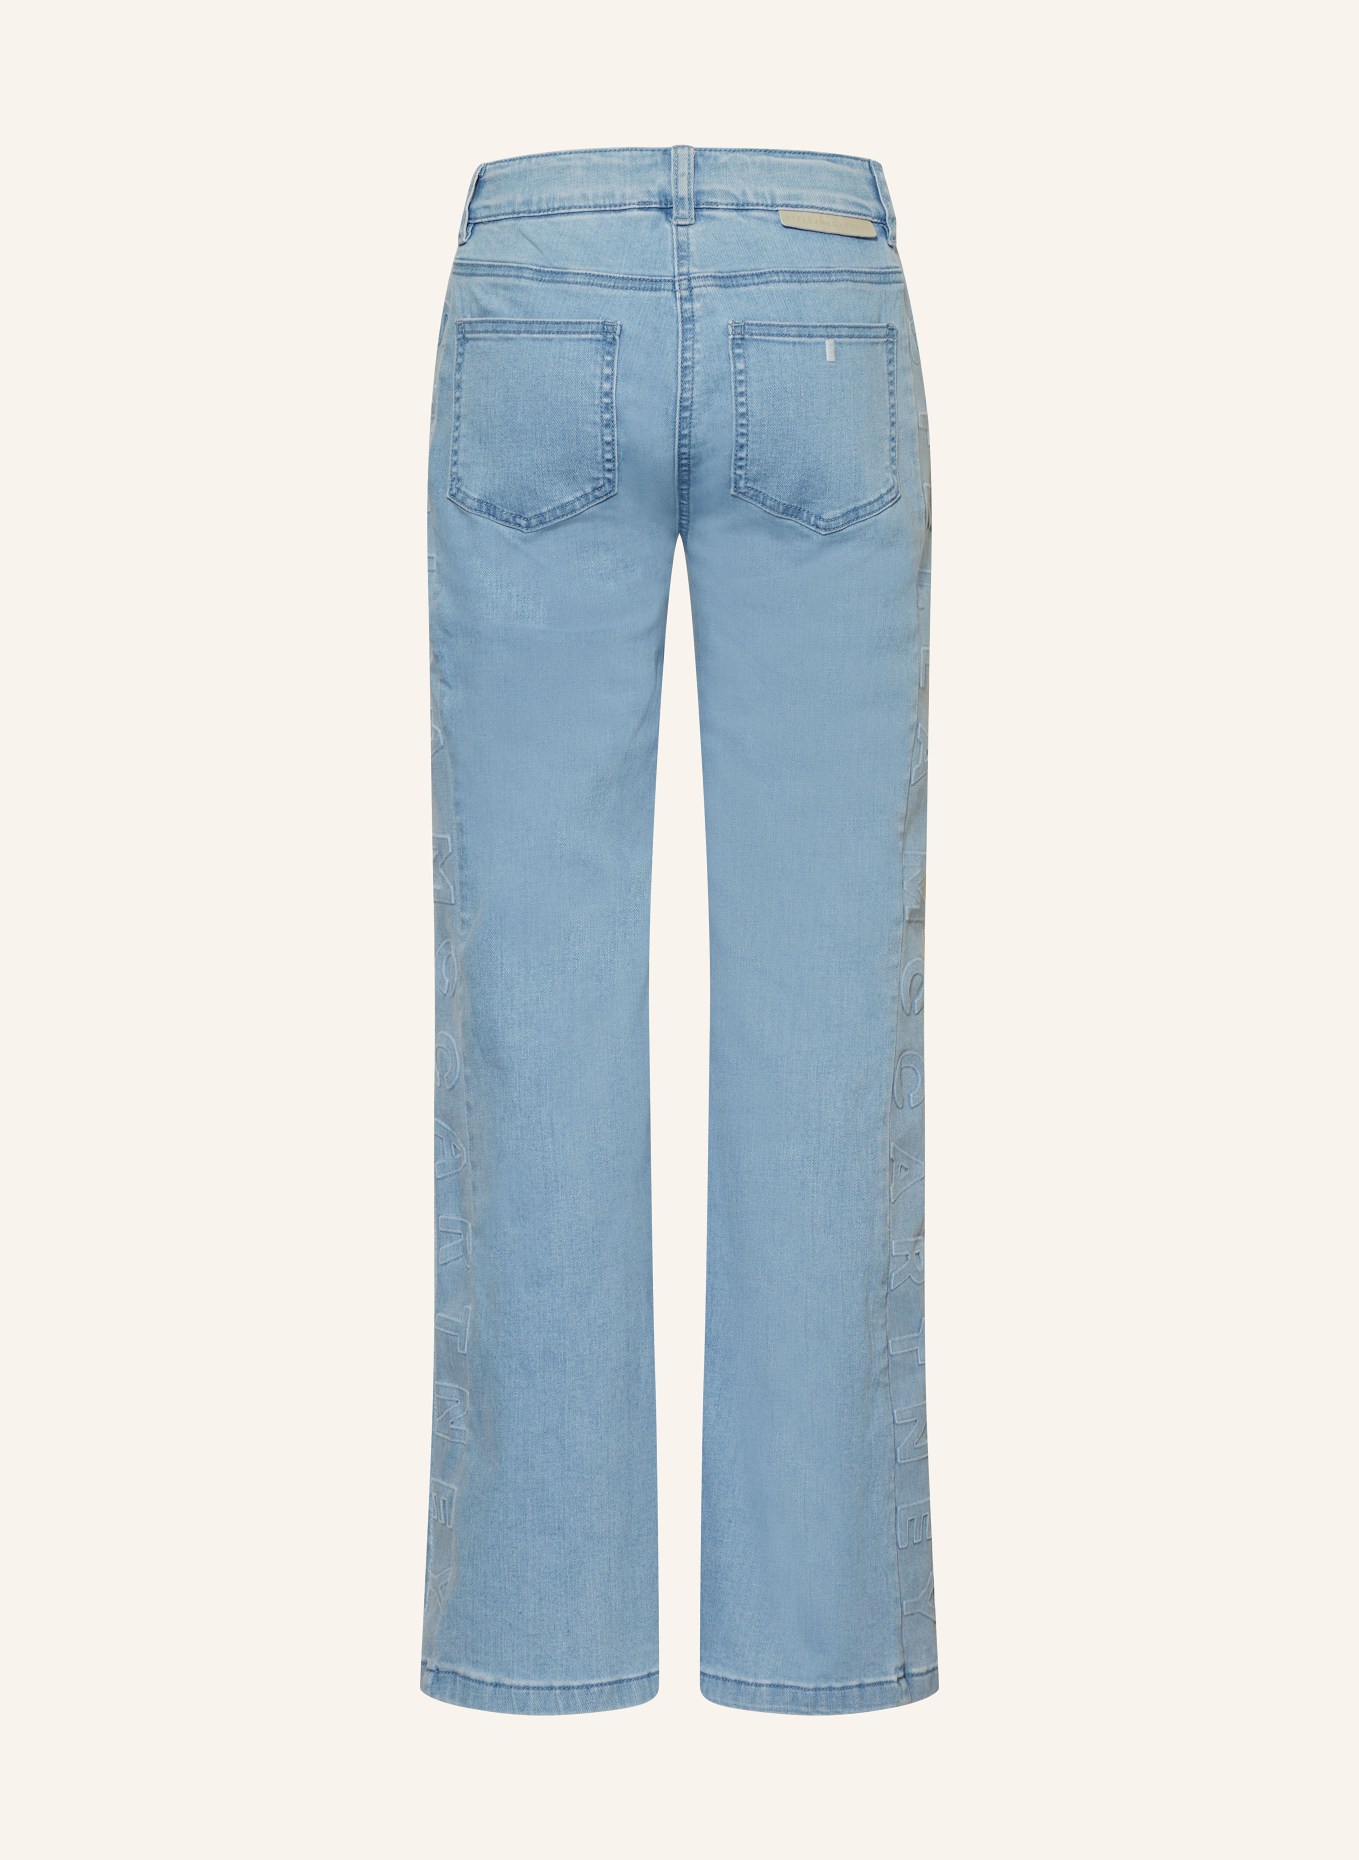 STELLA McCARTNEY KIDS Jeans, Farbe: 614 BLUE (Bild 2)